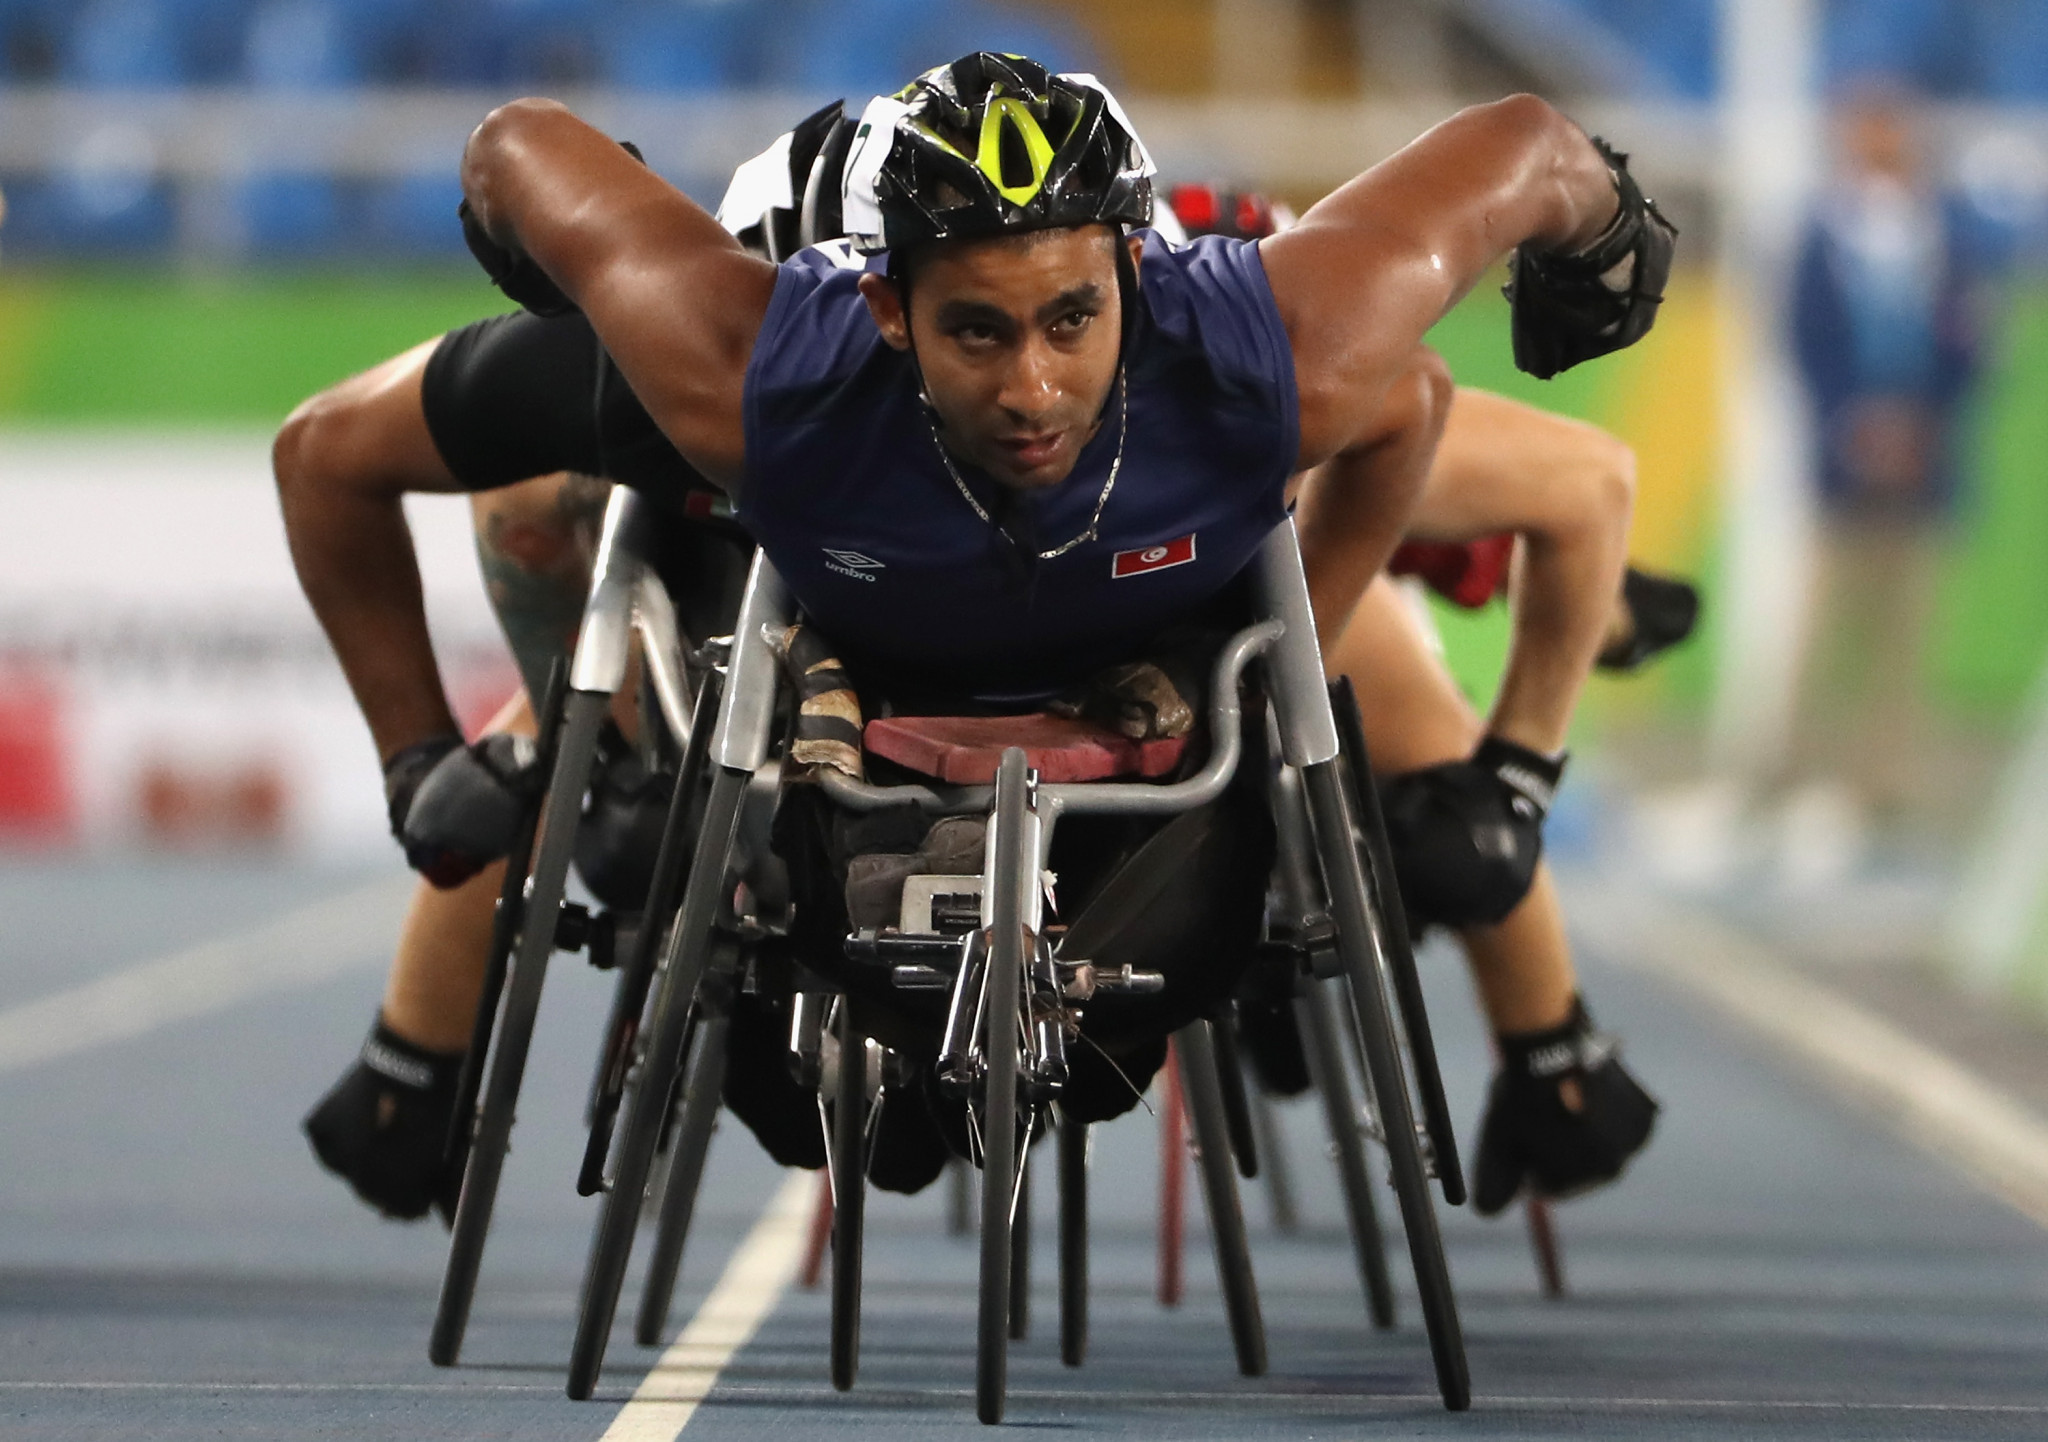 Ktila secures third gold of World Para Athletics Grand Prix in Dubai